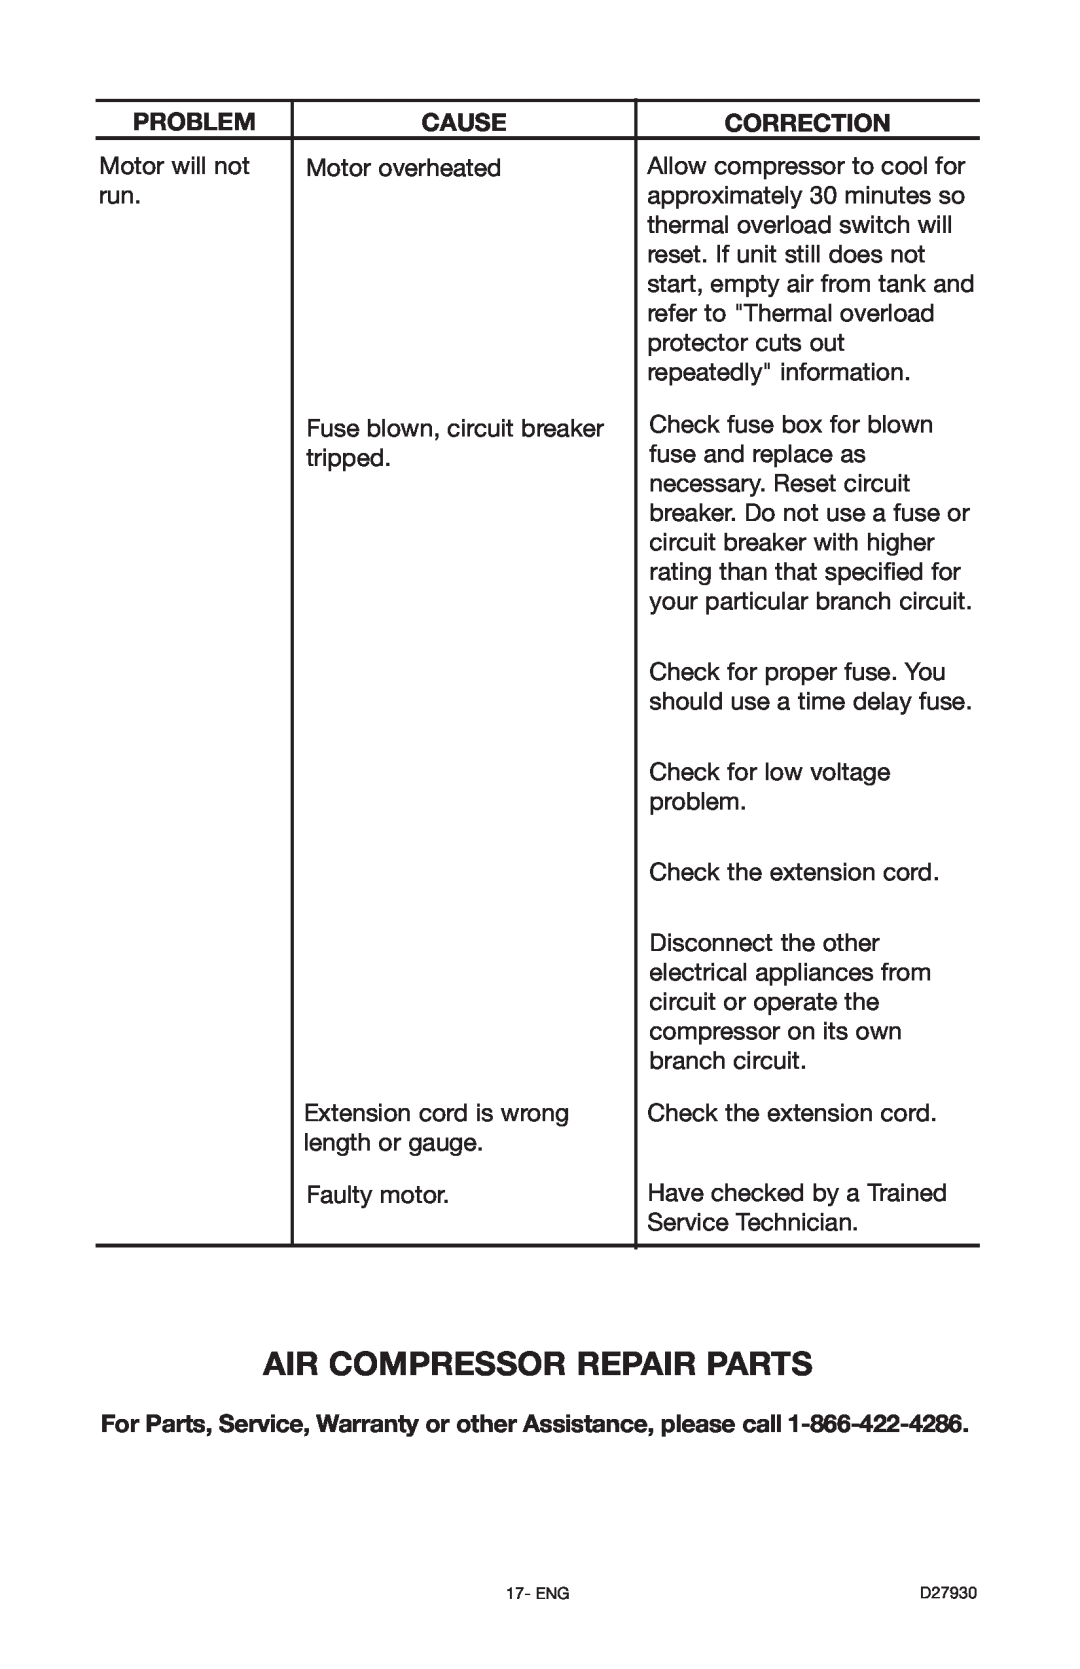 Delta D27930, CP200 instruction manual Air Compressor Repair Parts, Problem, Cause, Correction 